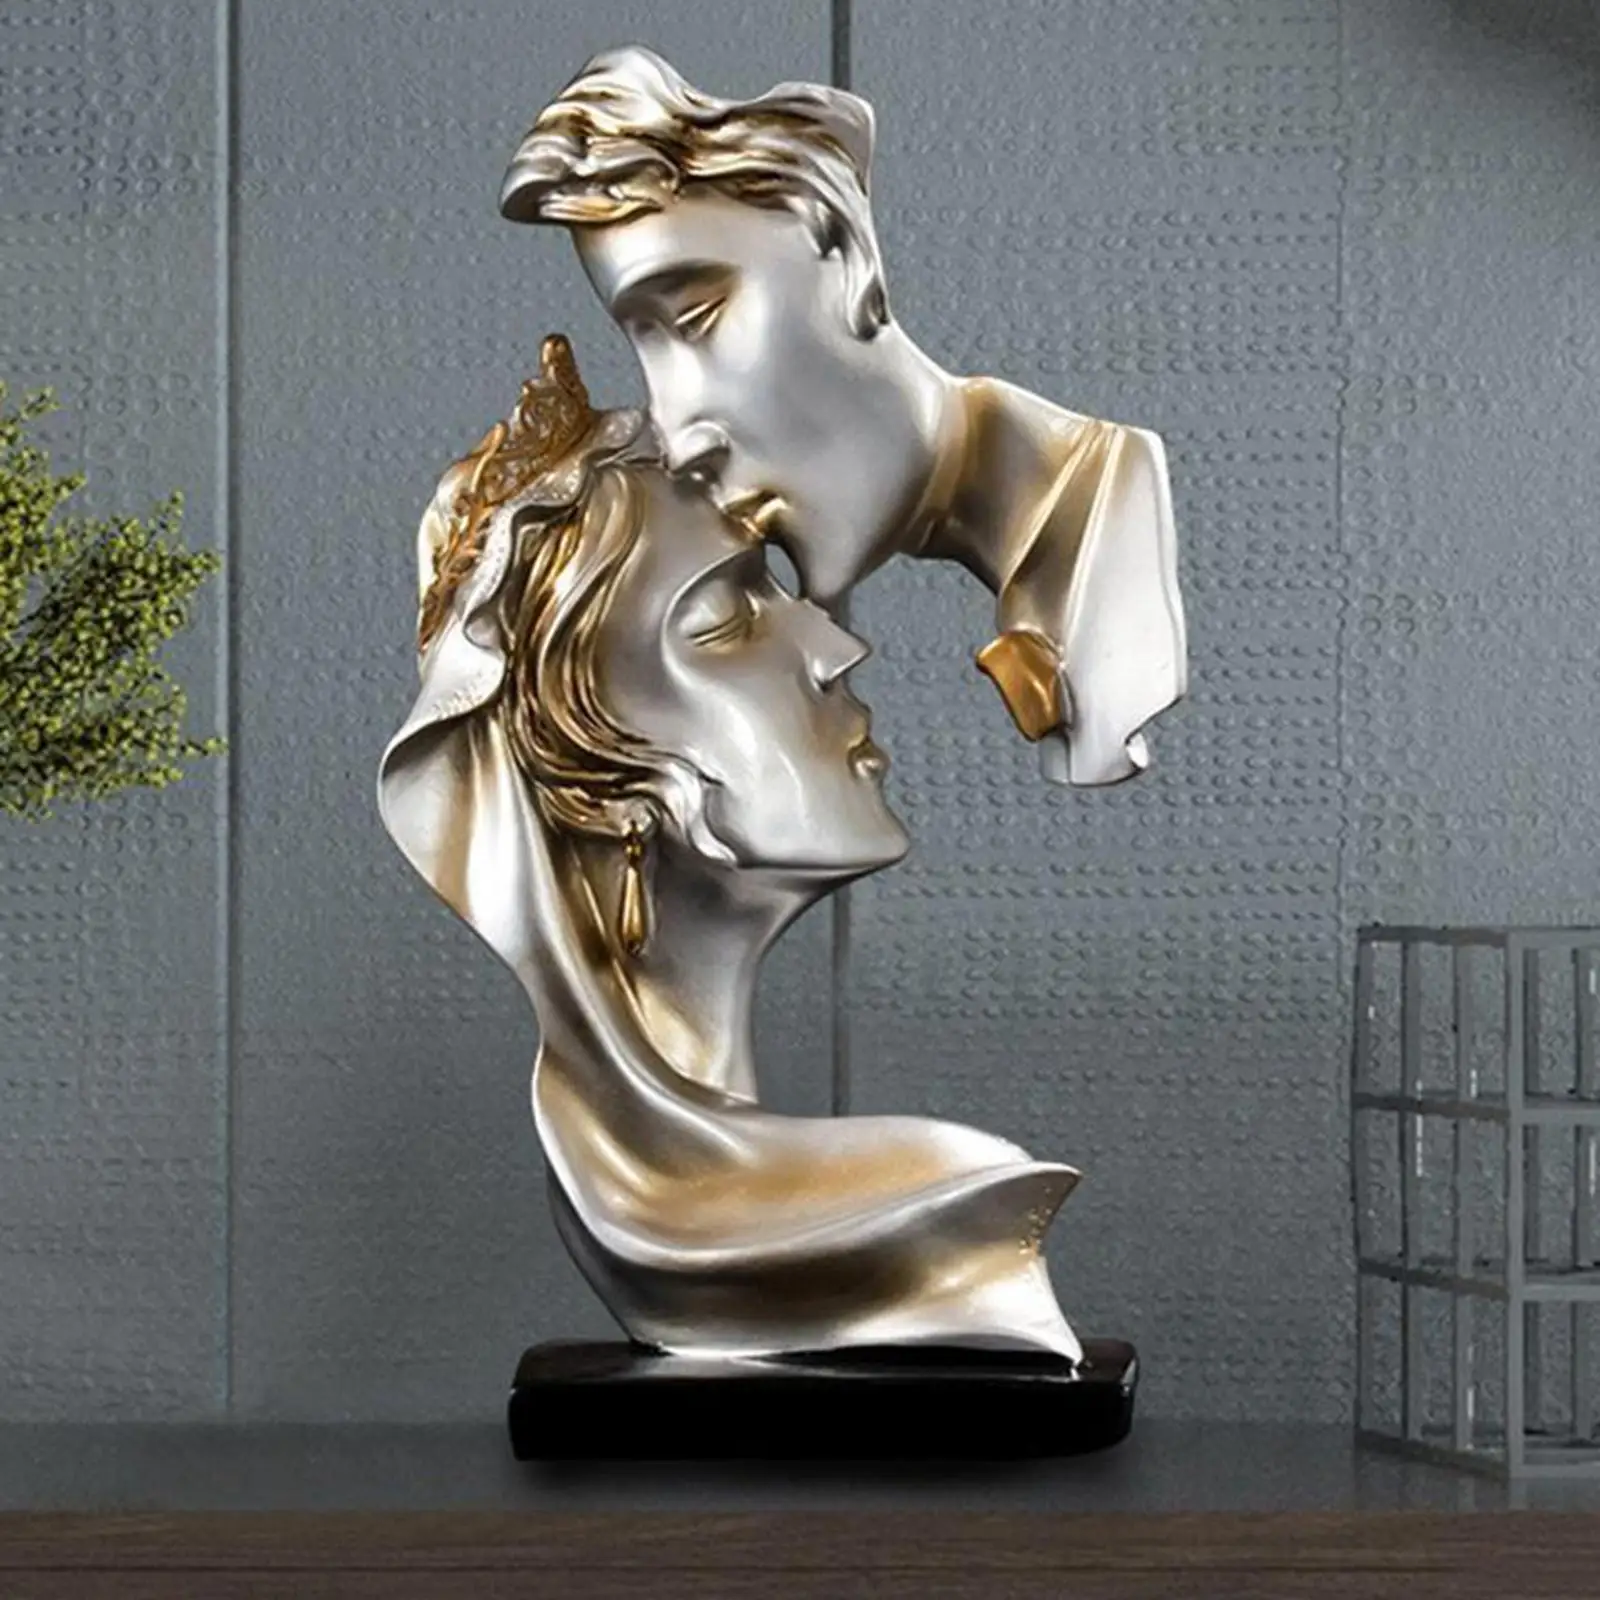 2x Couples Statue Home Decor Ornament Mini Resin Figurines Collectible Gray